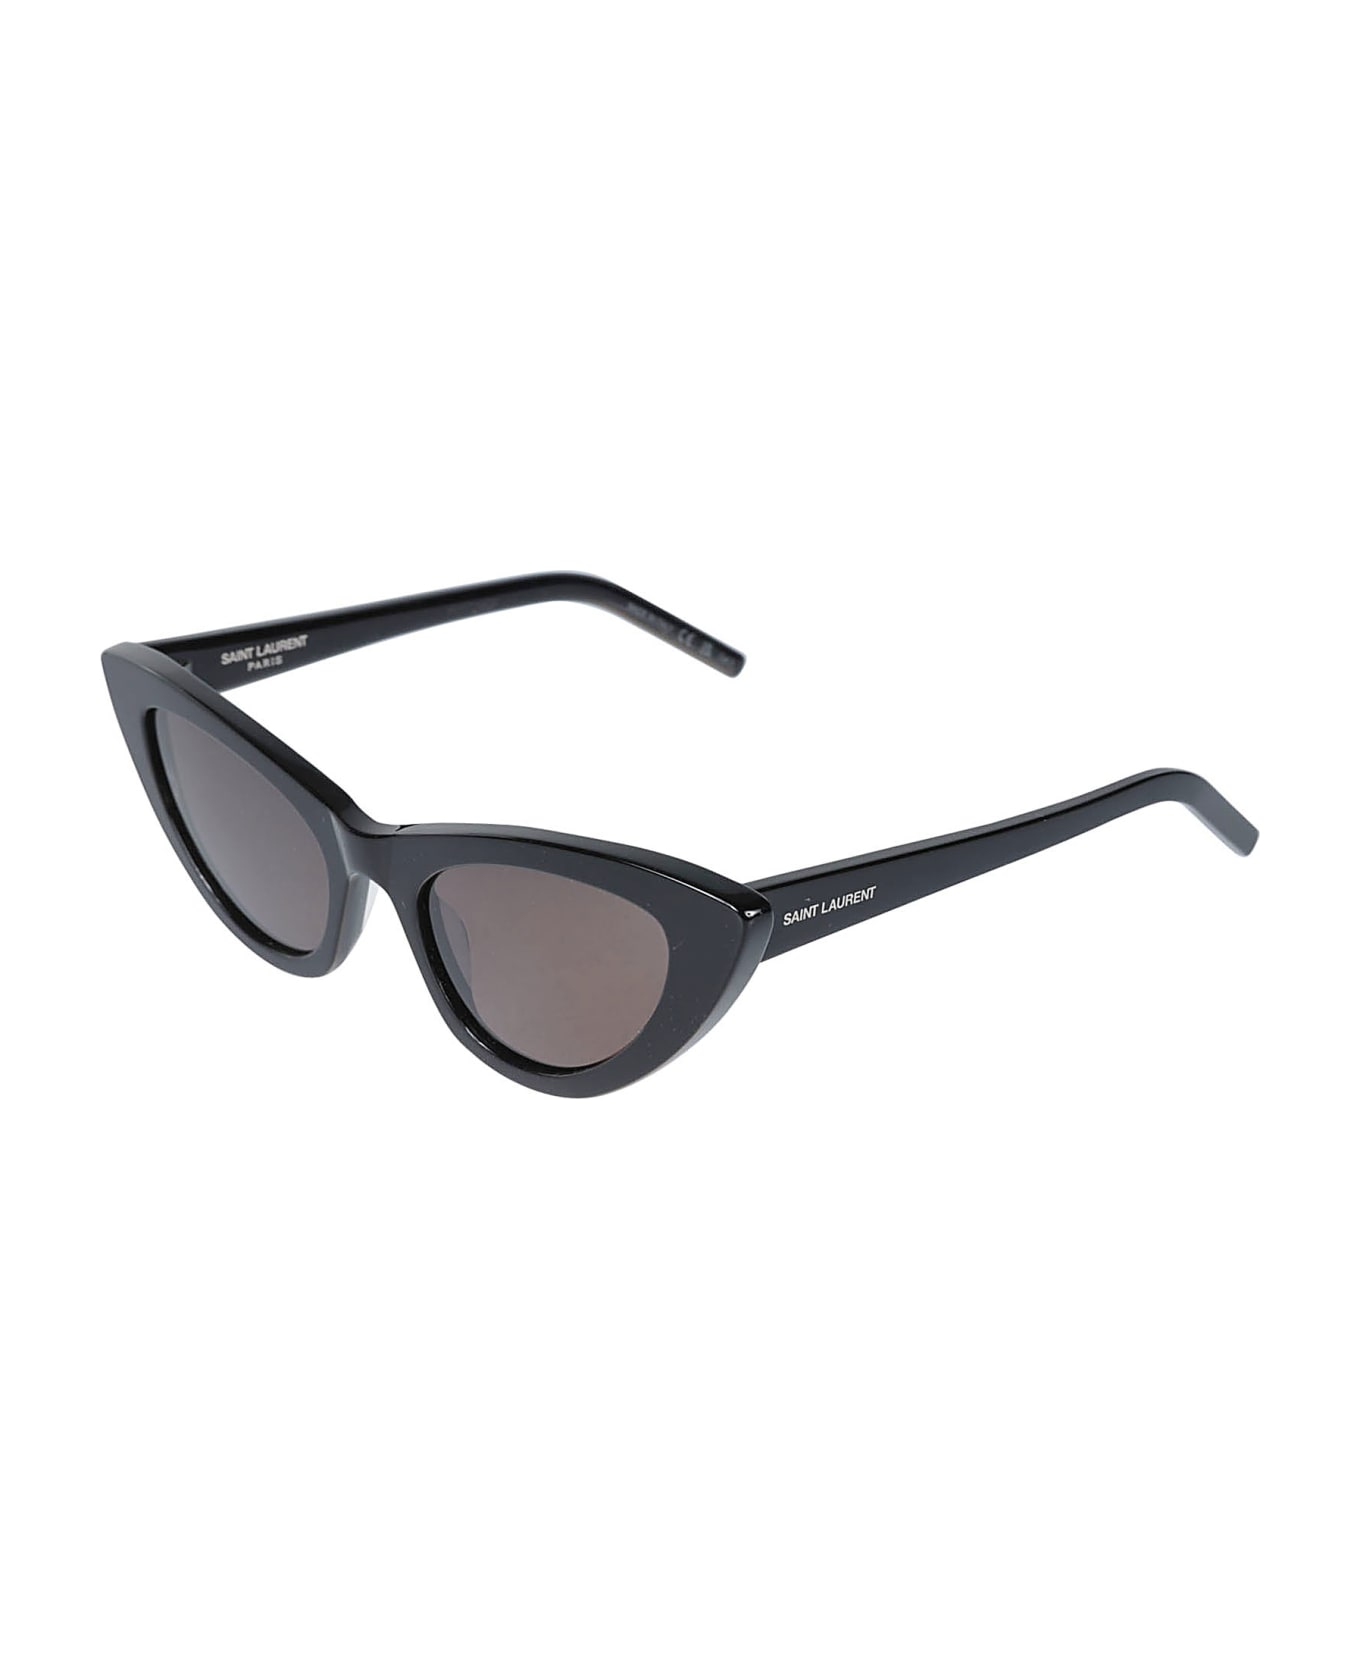 Saint Laurent Eyewear Lily Sunglasses - Black/Grey